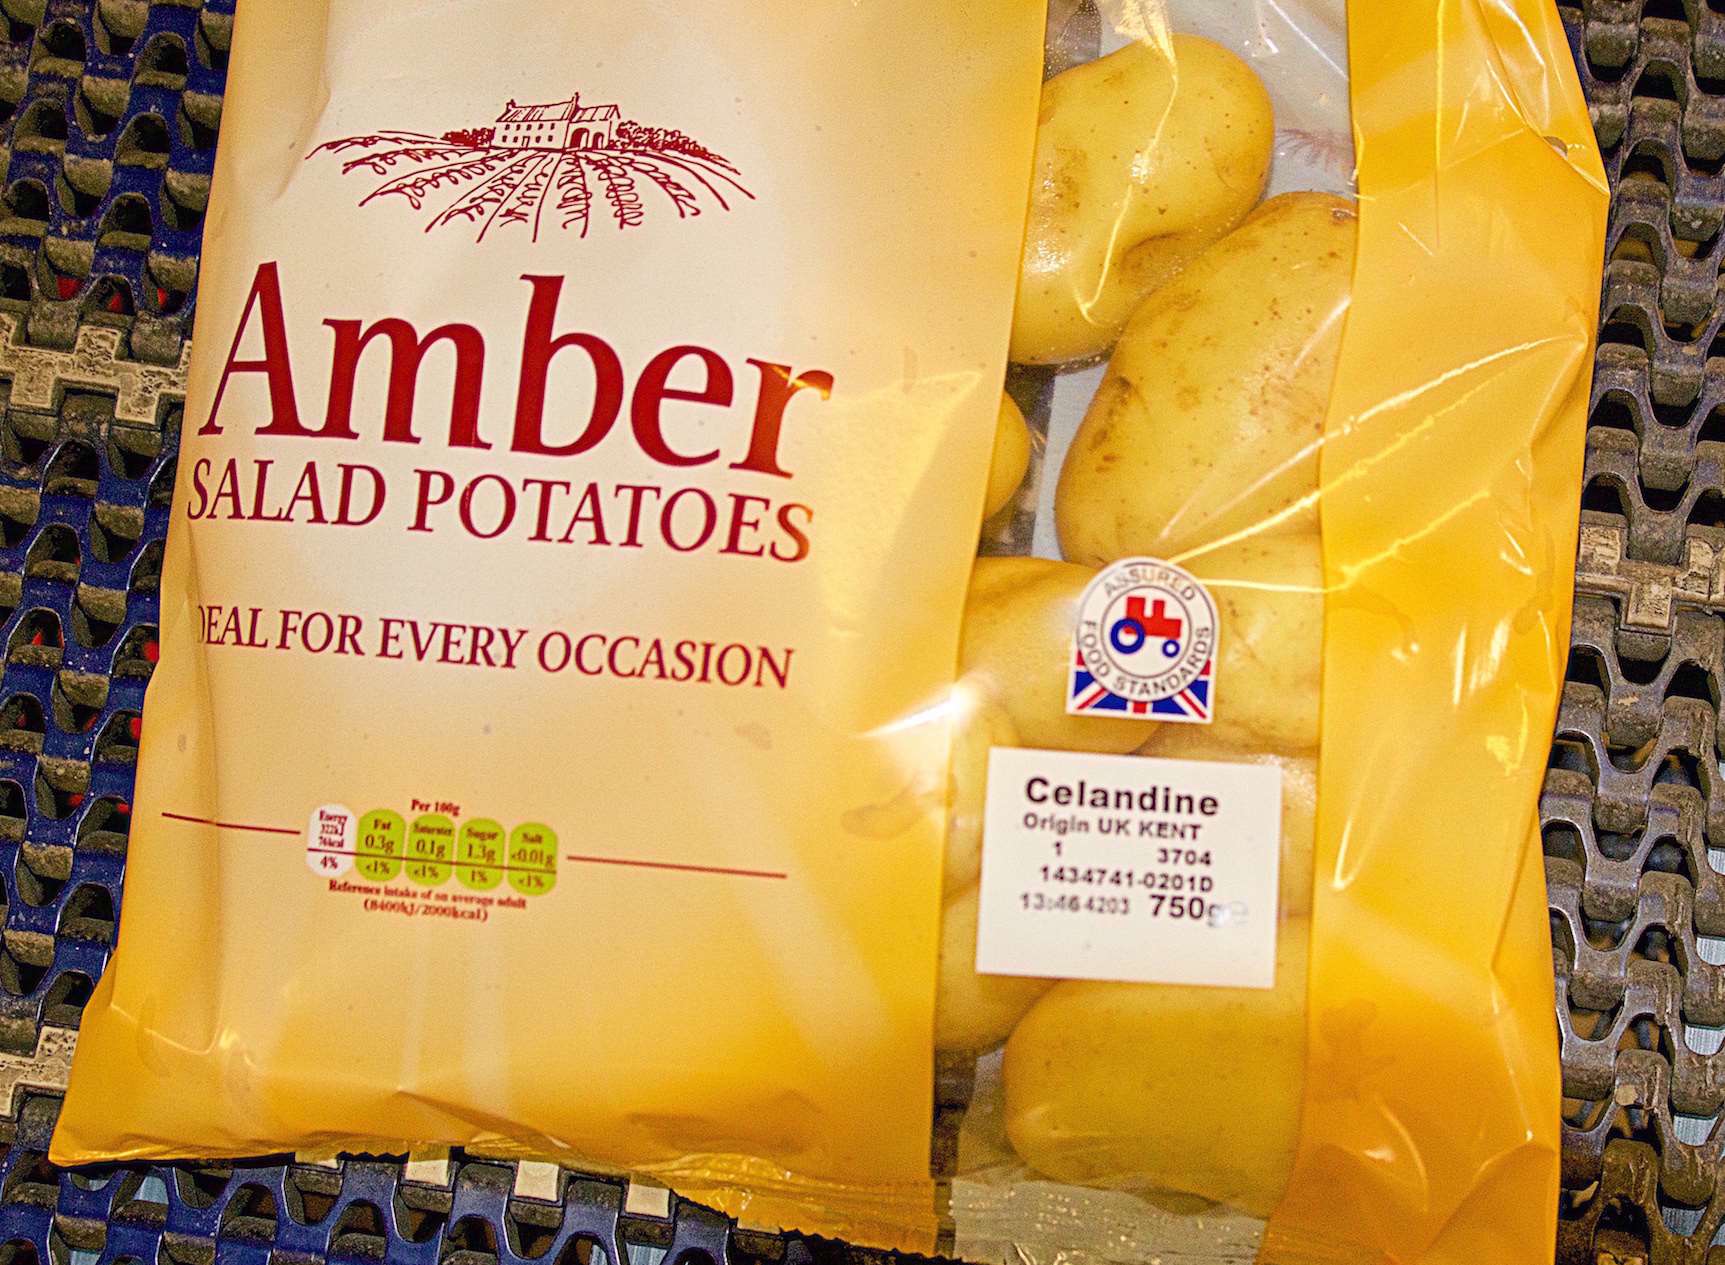 Amber salad potatoes